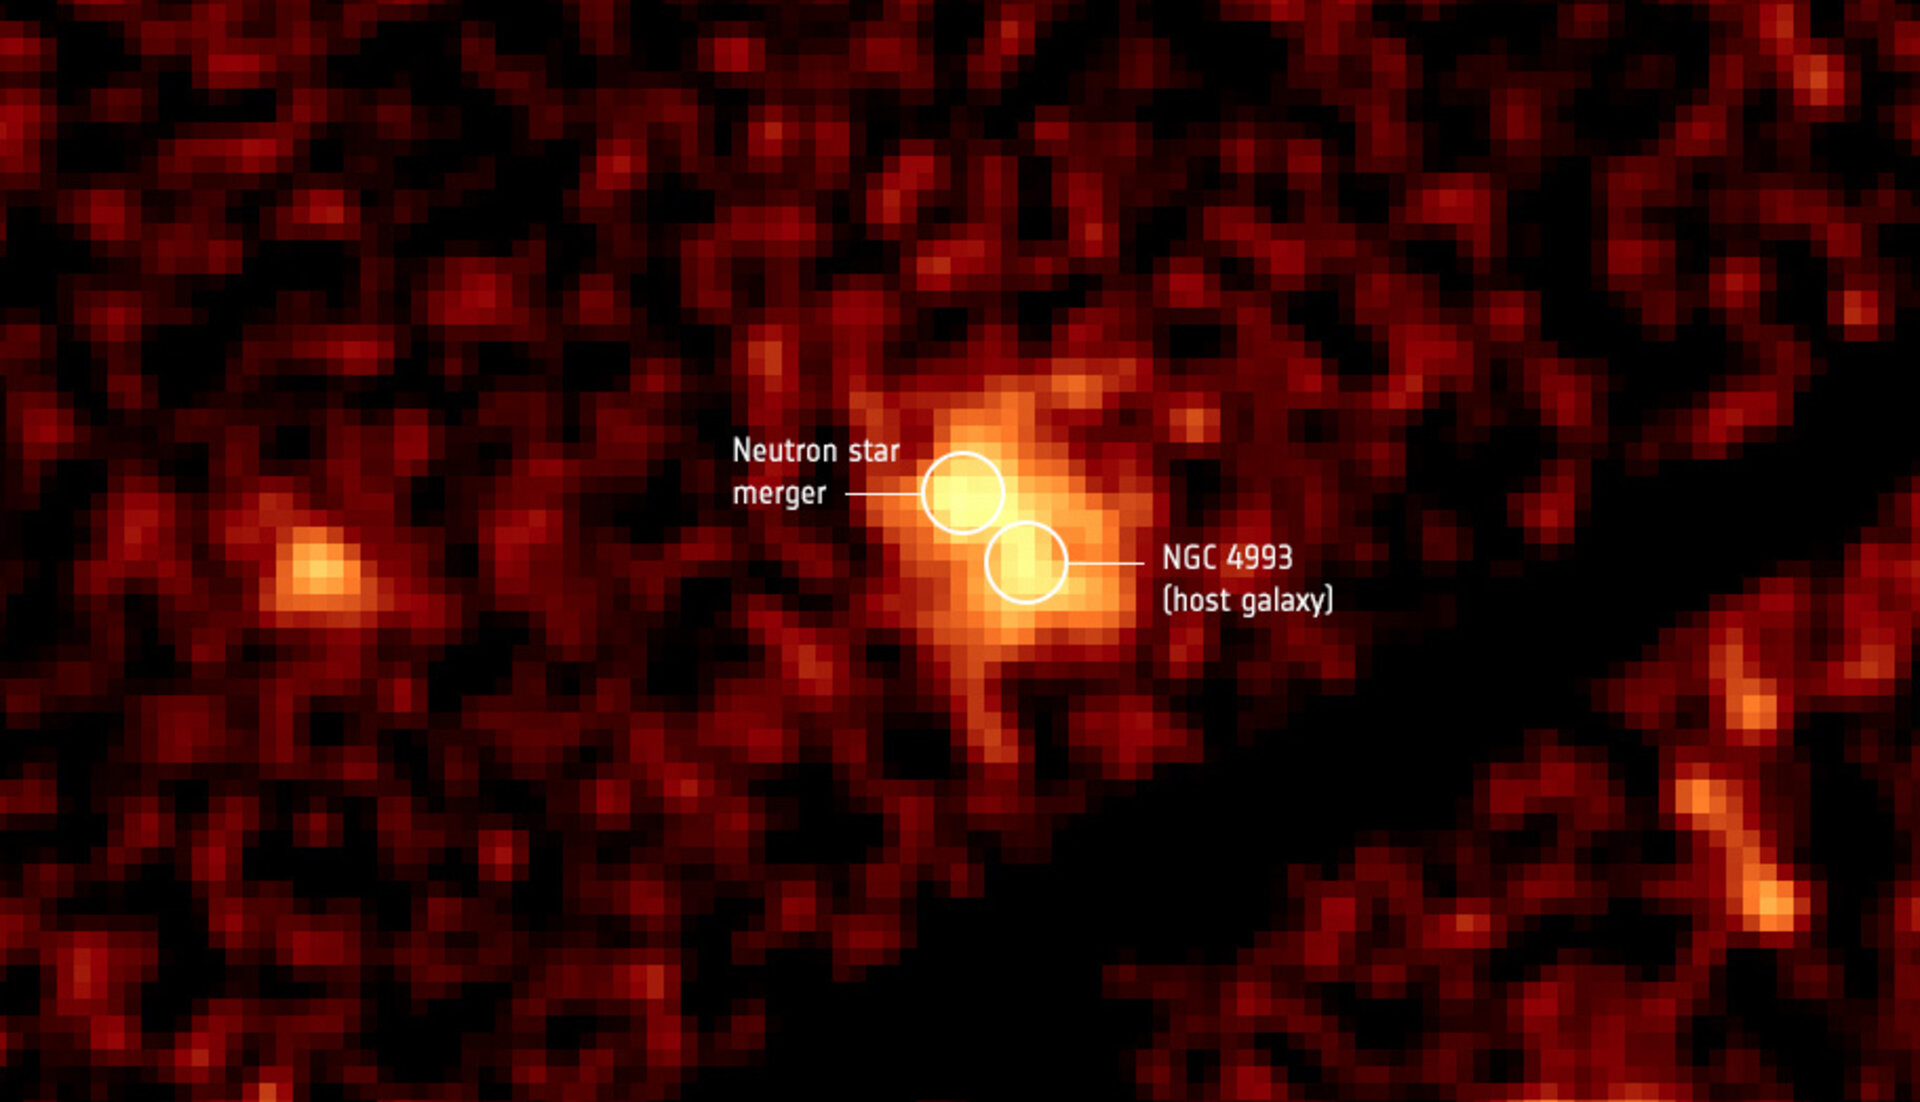 Neutron star merger in galaxy NGC 4993